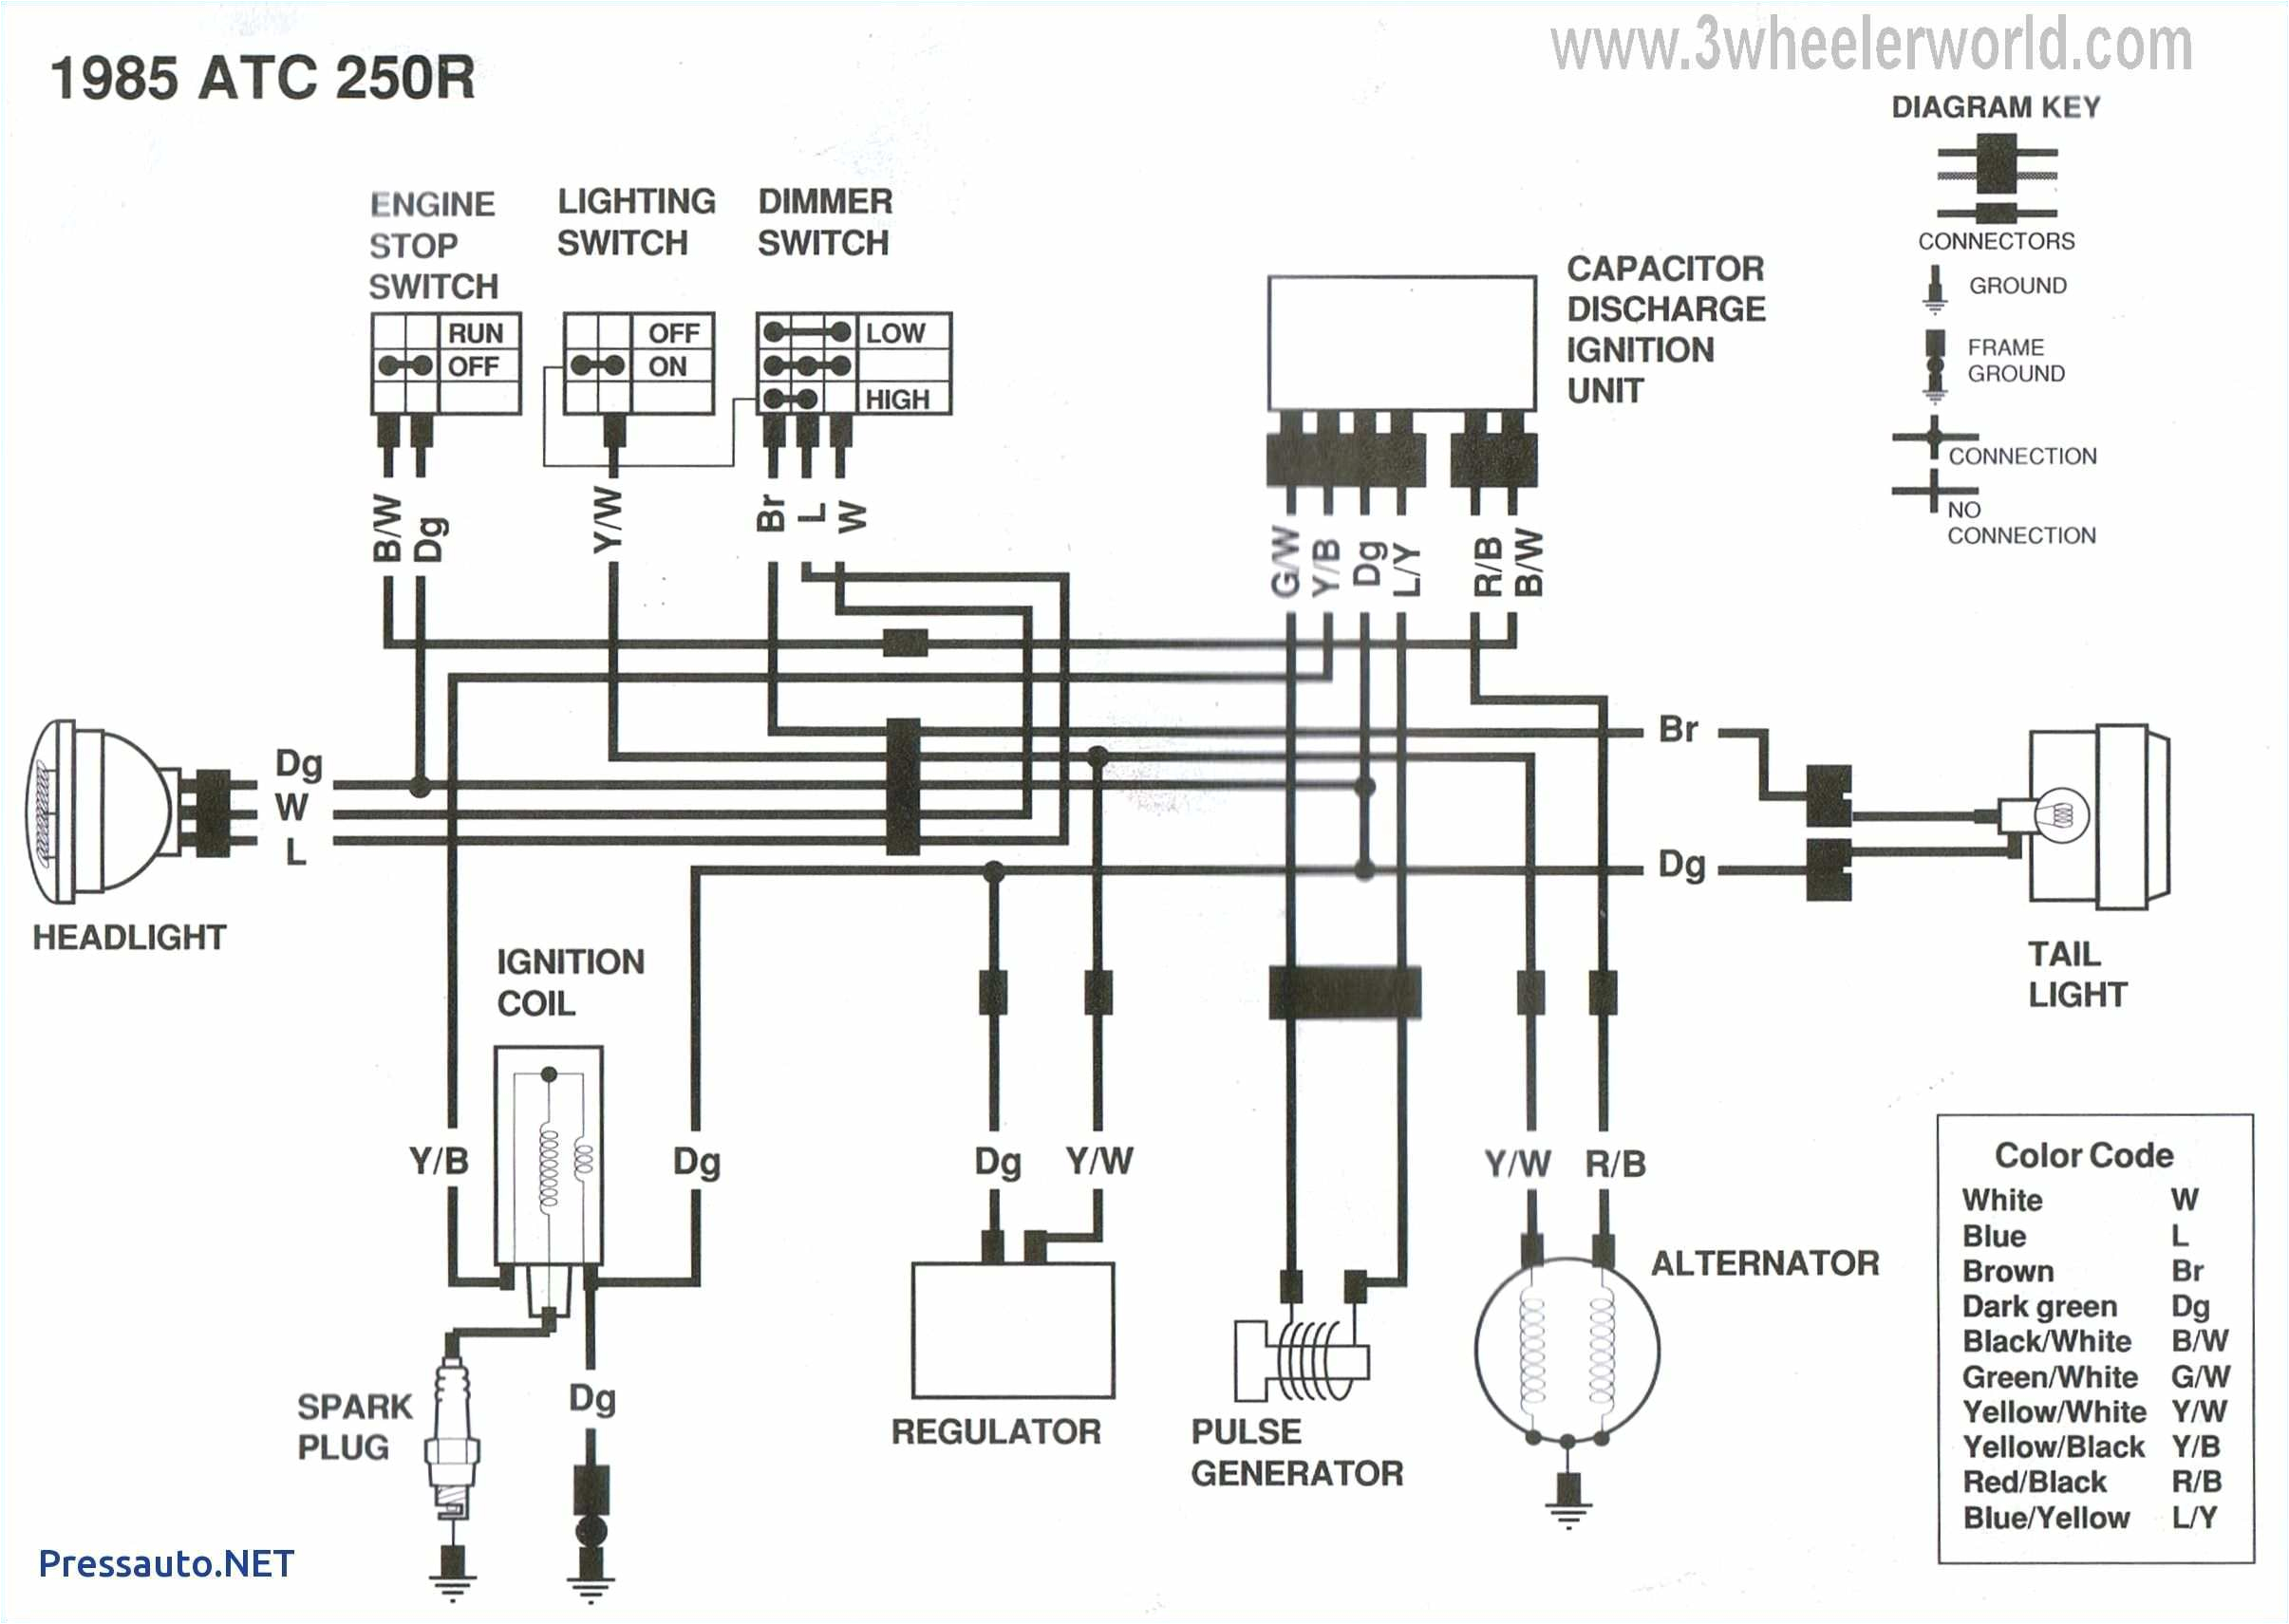 wr450f wiring diagram wiring diagram show wiring diagram pick up coil klr 650 wiring diagram pics